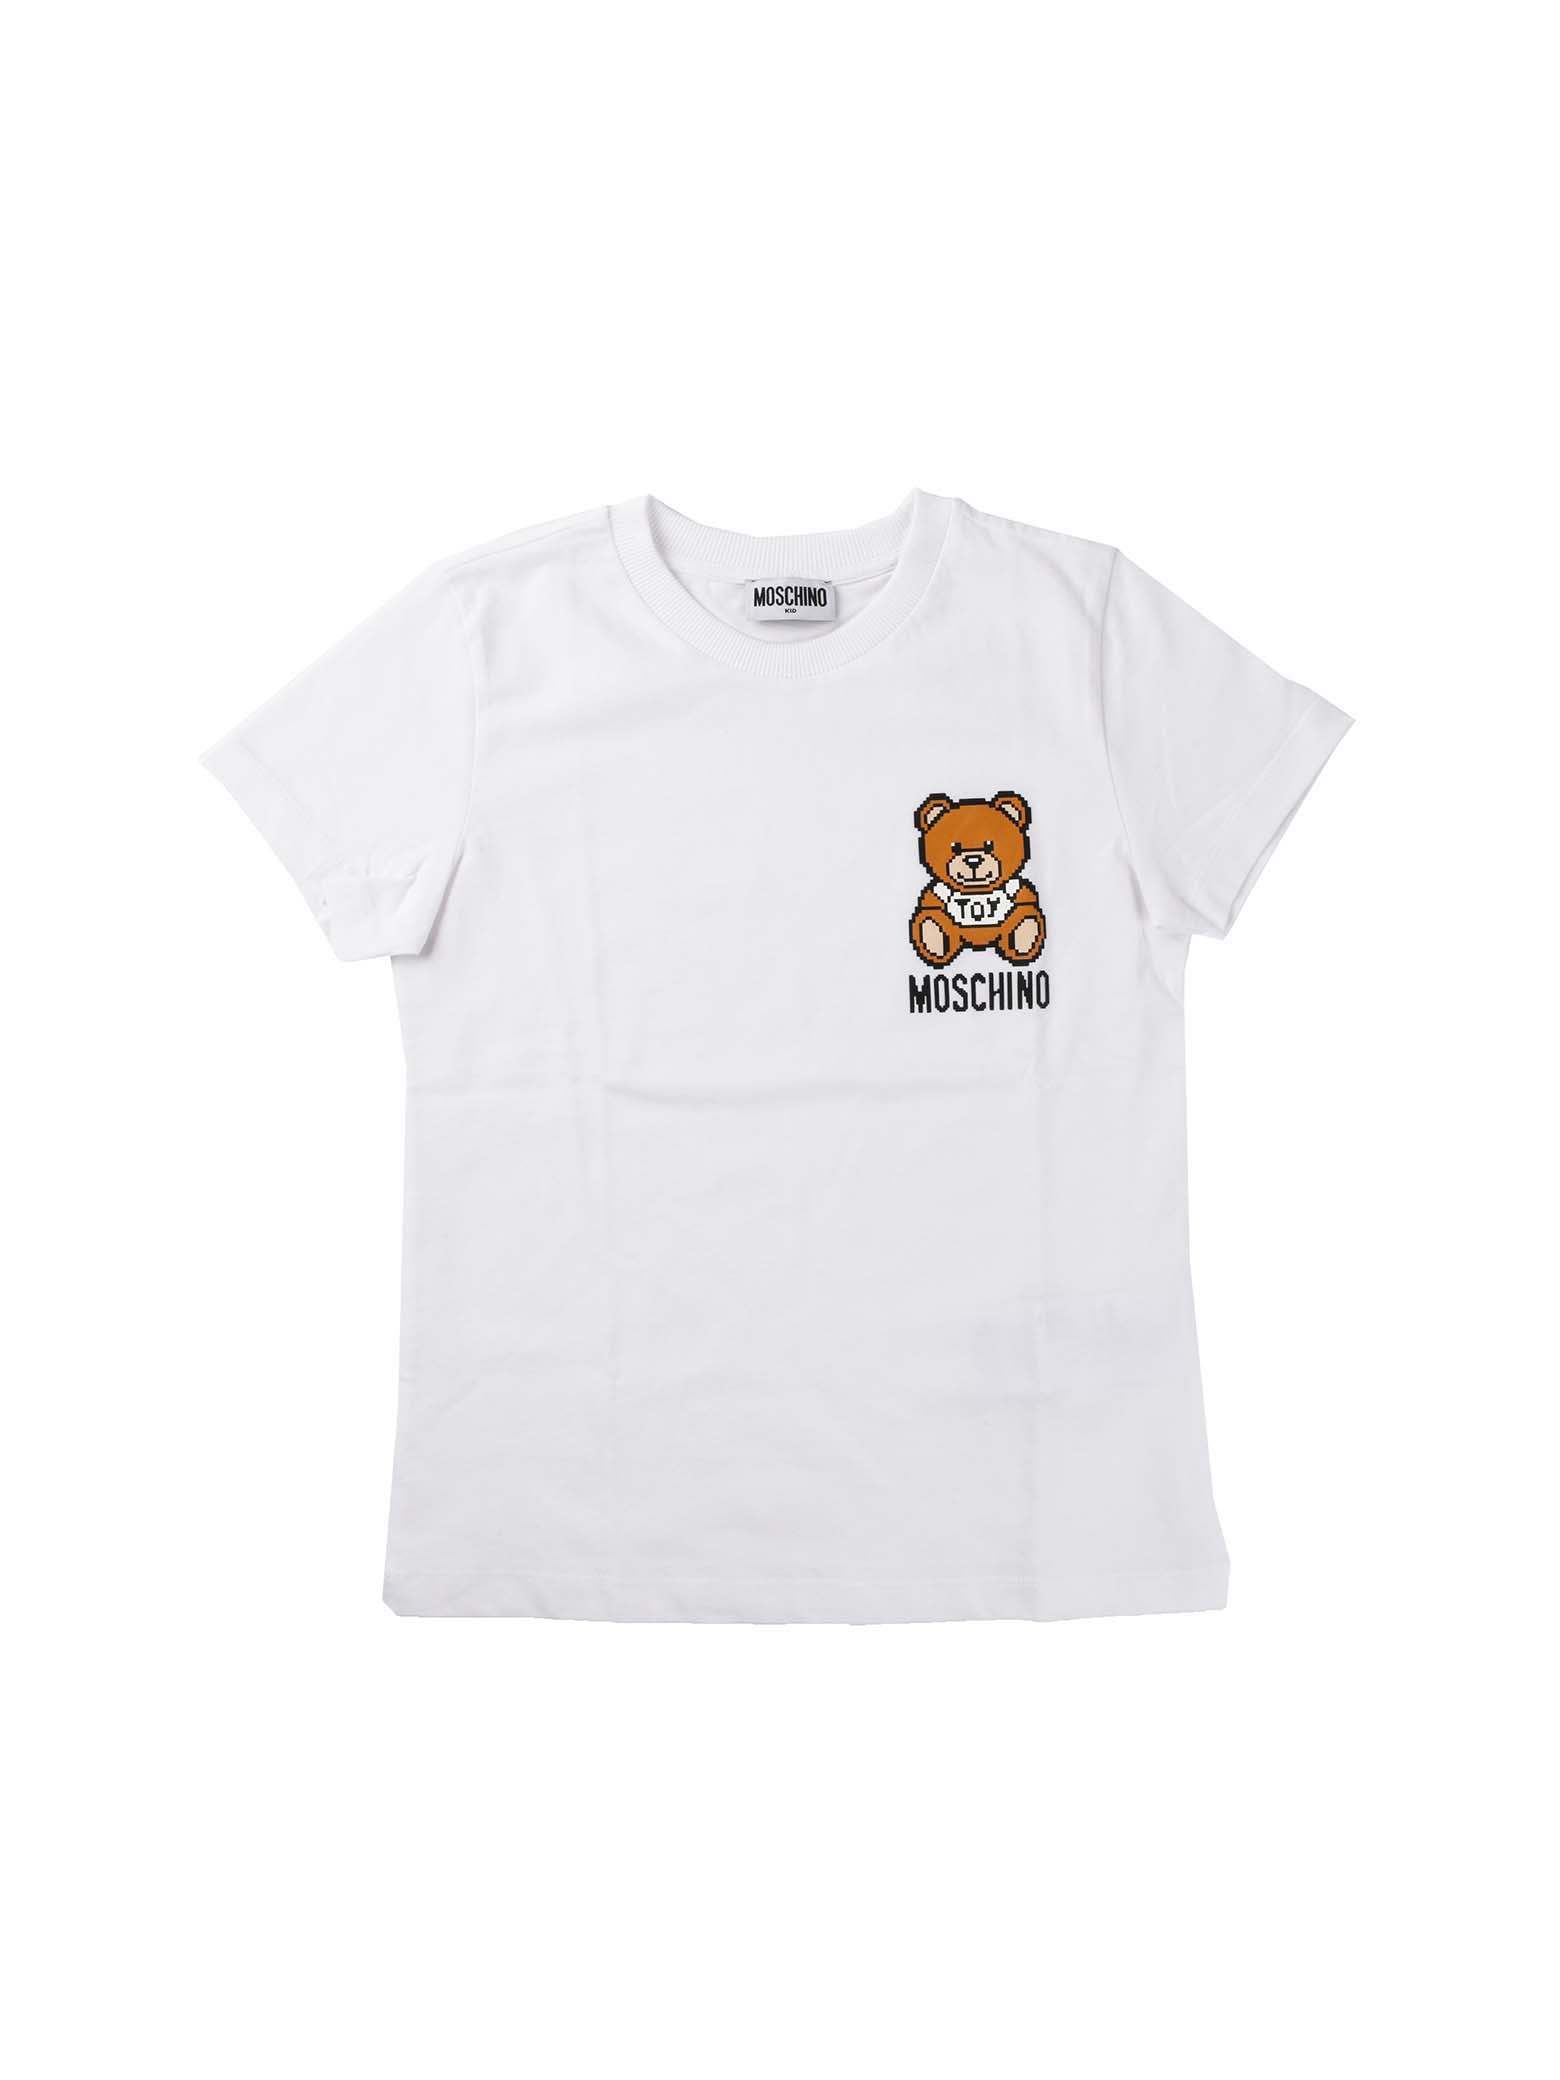 Moschino White Short Sleeve T-shirt With Bear Print